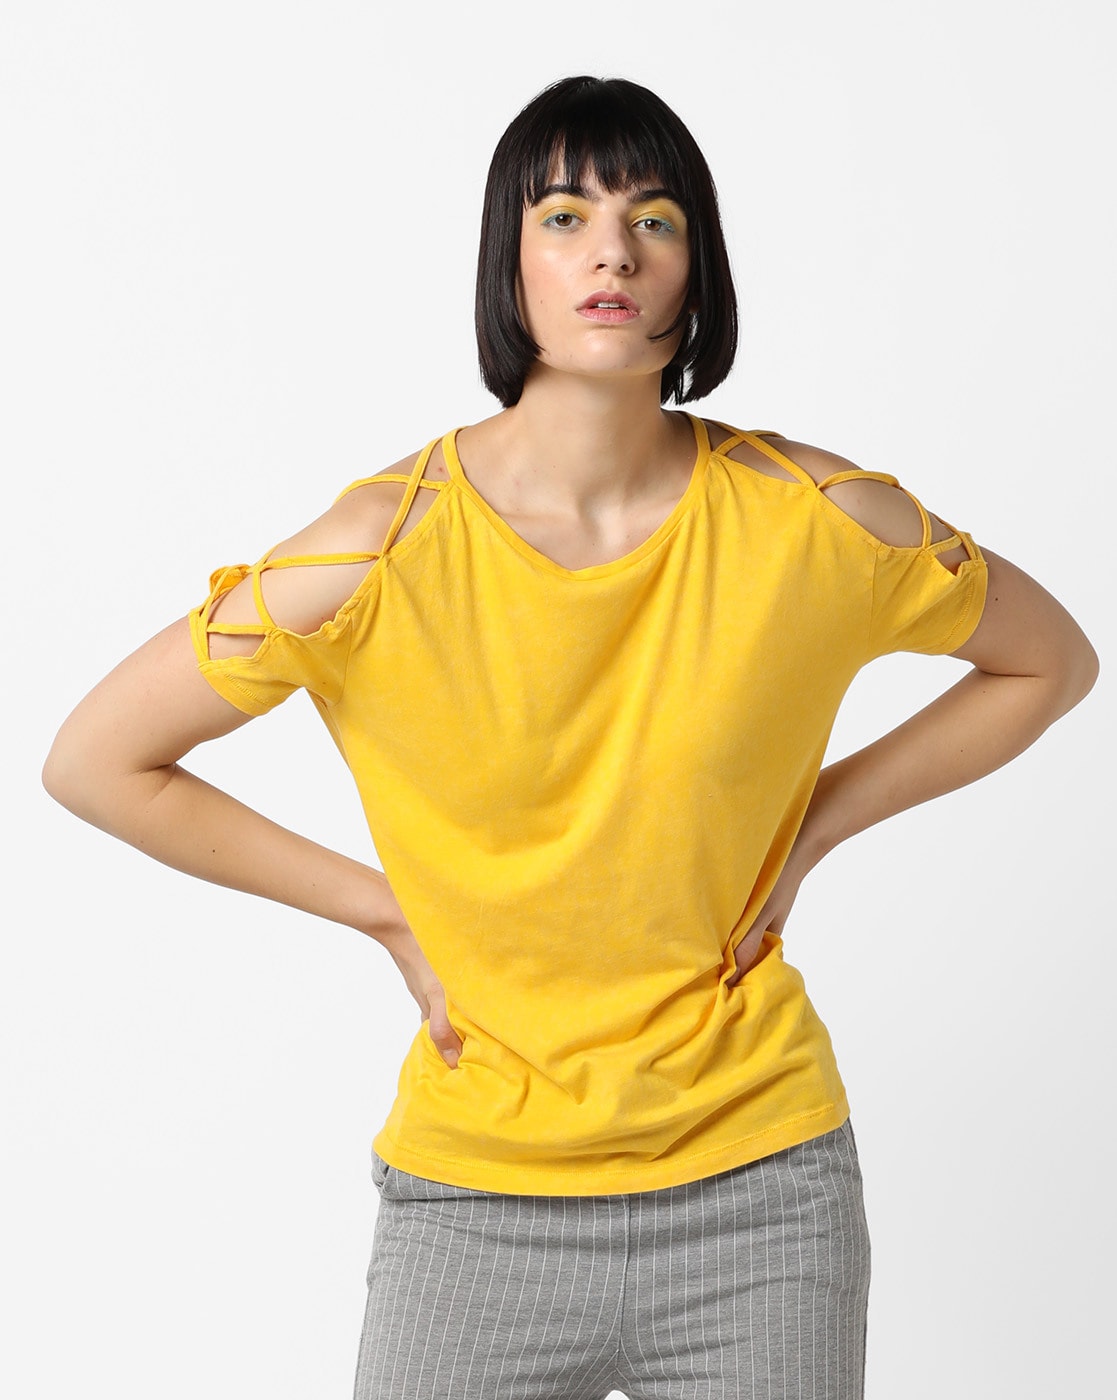 Buy Yellow Tops for Moda Online Ajio.com